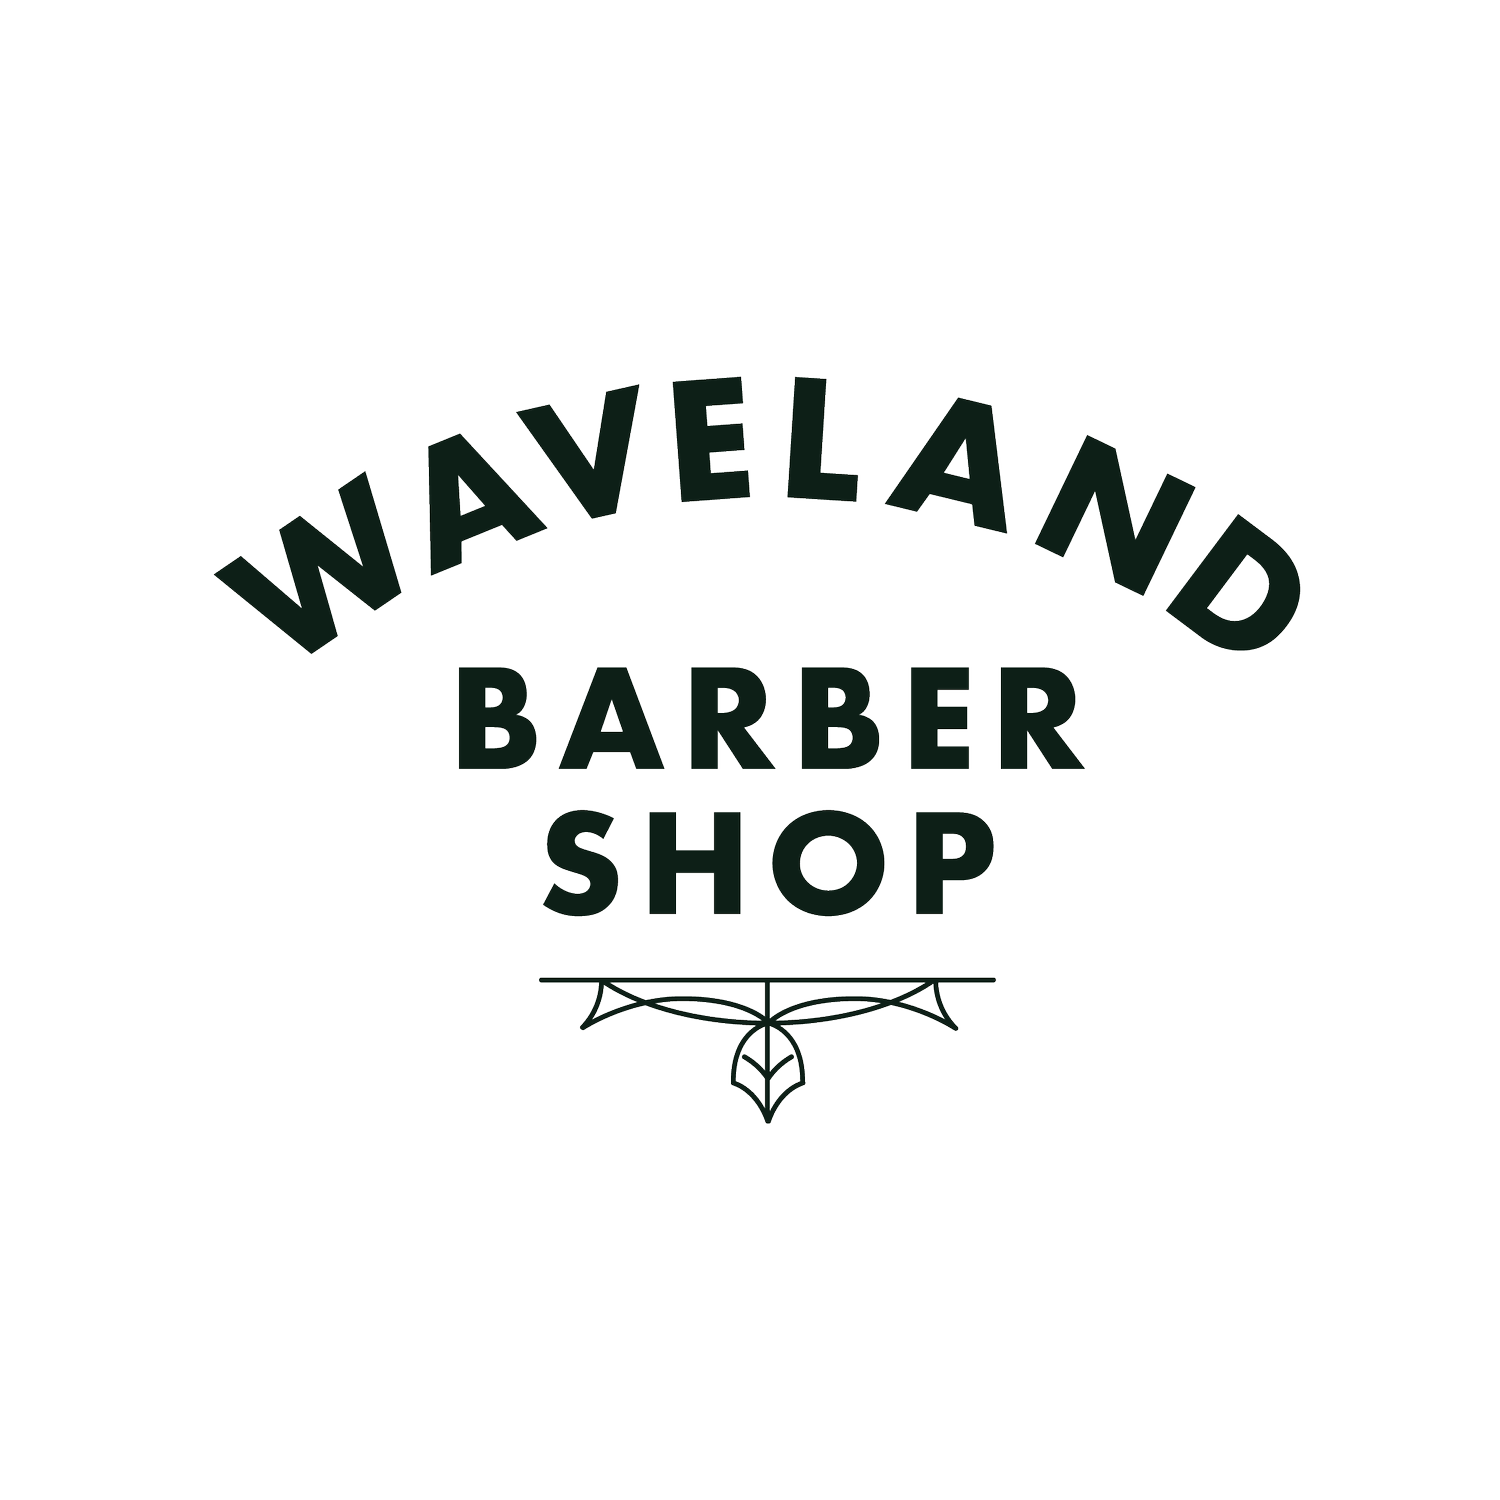 Waveland Barbershop